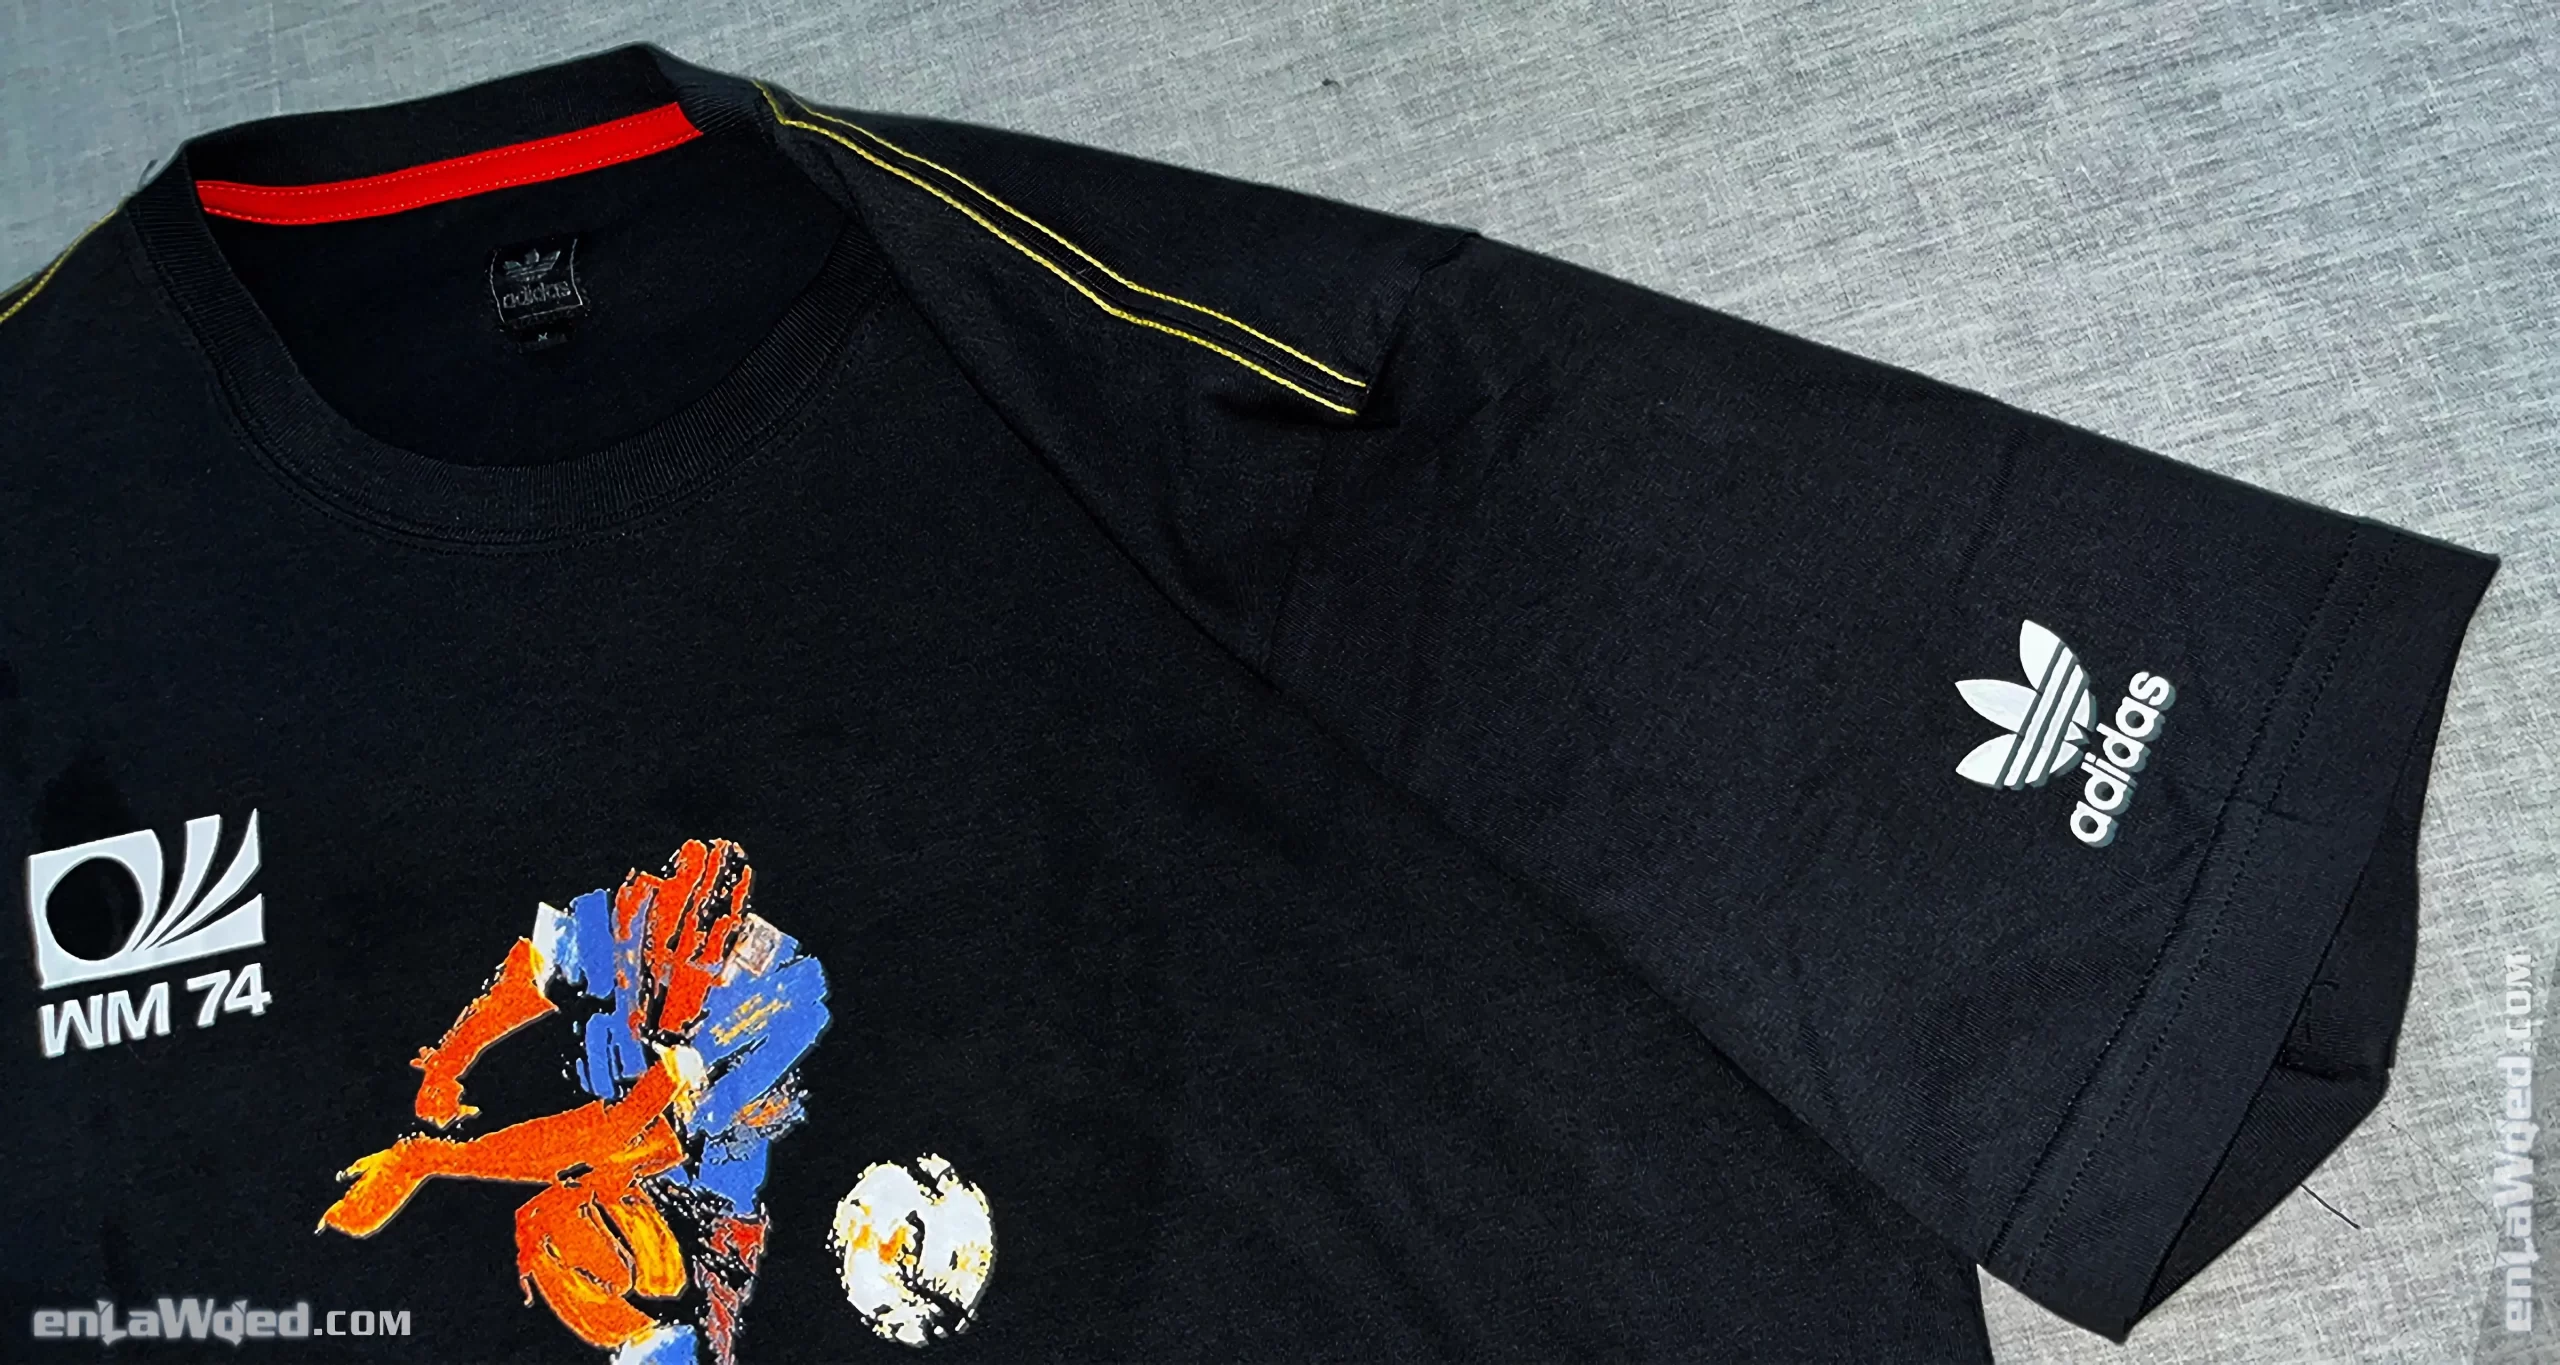 Men’s 2006 Germany ’74 FIFA World Cup T-Shirt by Adidas: Constructive (EnLawded.com file #lmc3uab1wd32glixf78)